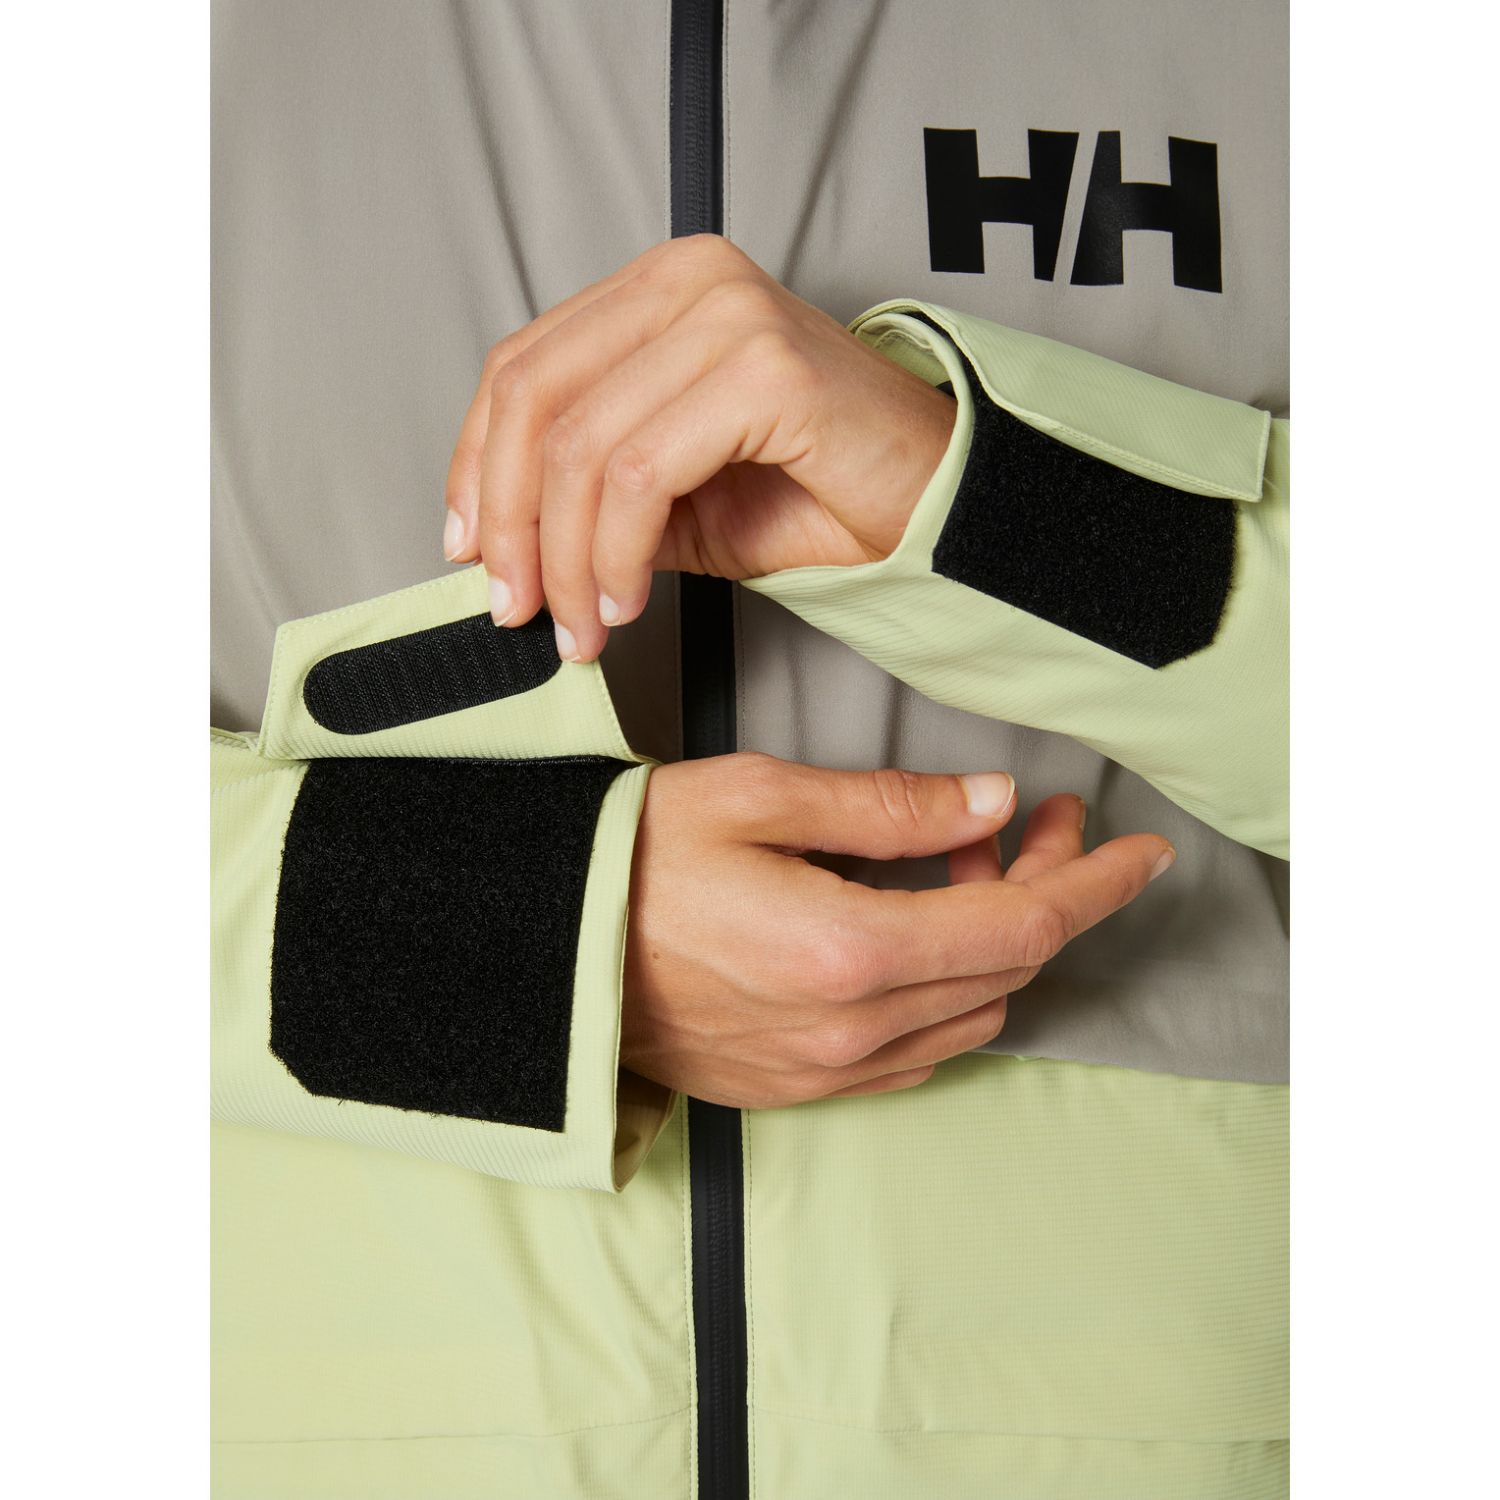 Helly Hansen Powchaser 2.0, manteau de ski, femmes, iced matcha